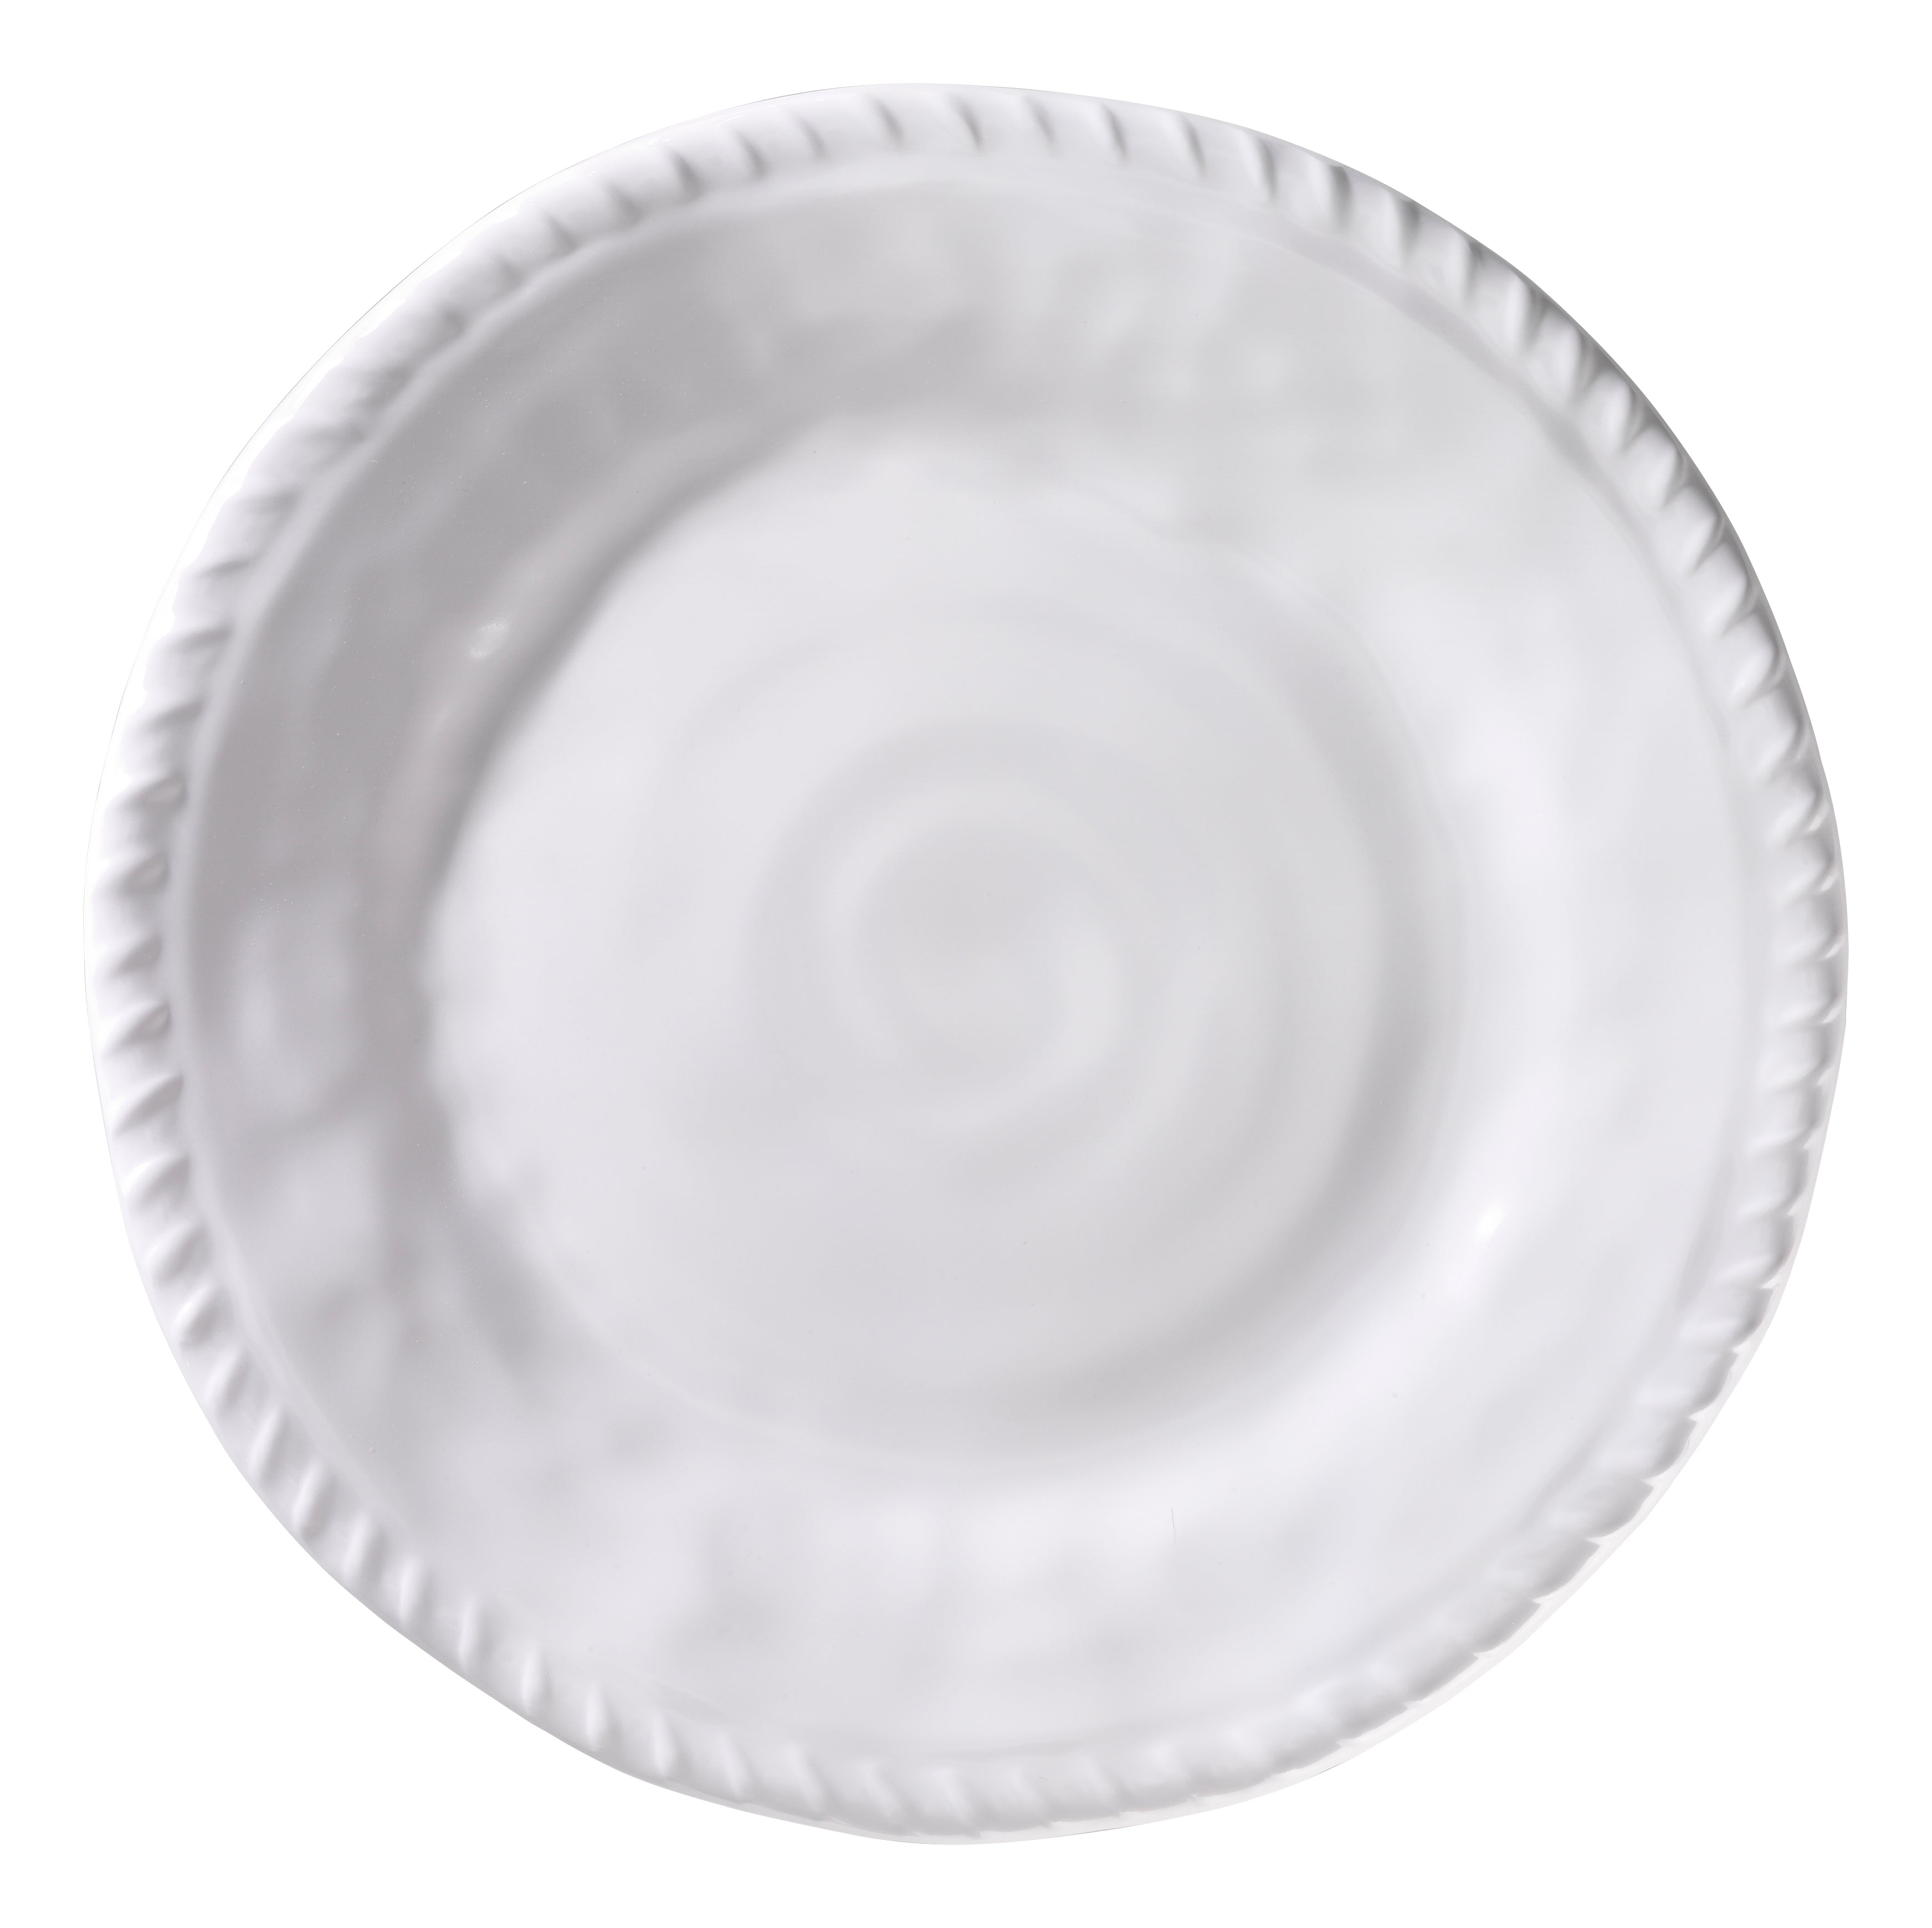 Merritt White Rope Dinnerware Collection Salad Plate 12027788